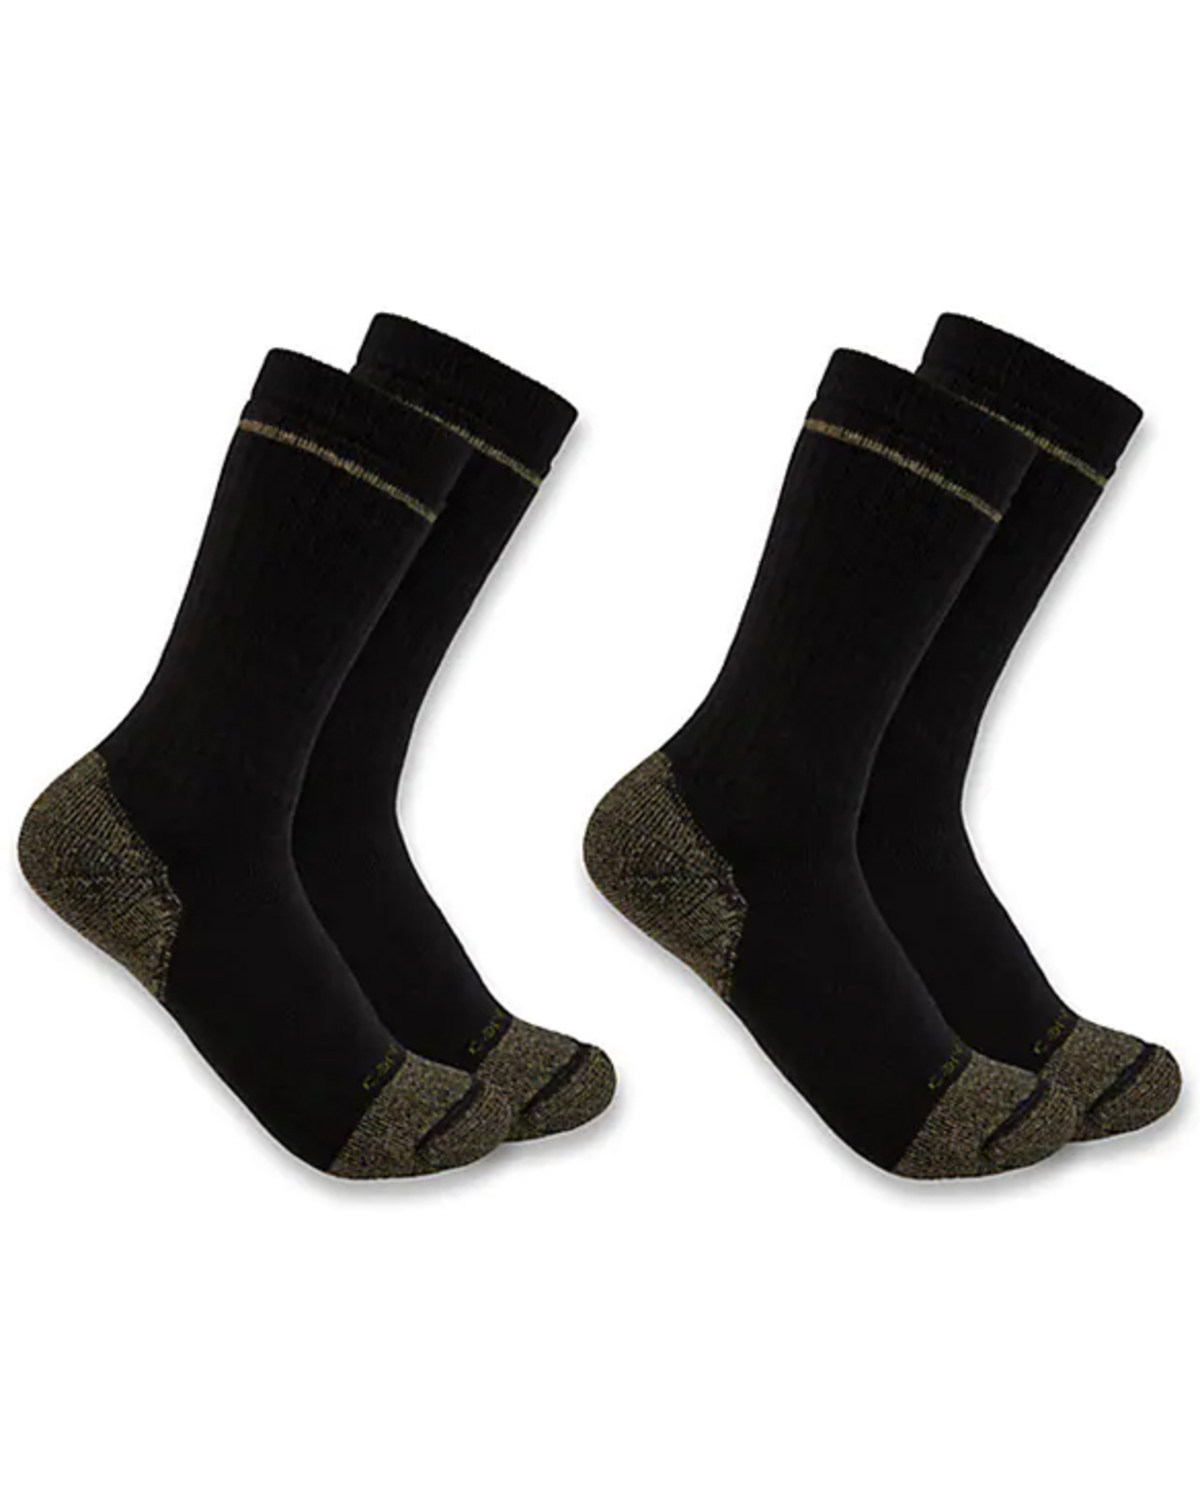 Carhartt Men's Midweight Steel Toe Boot Socks - 2-Pack